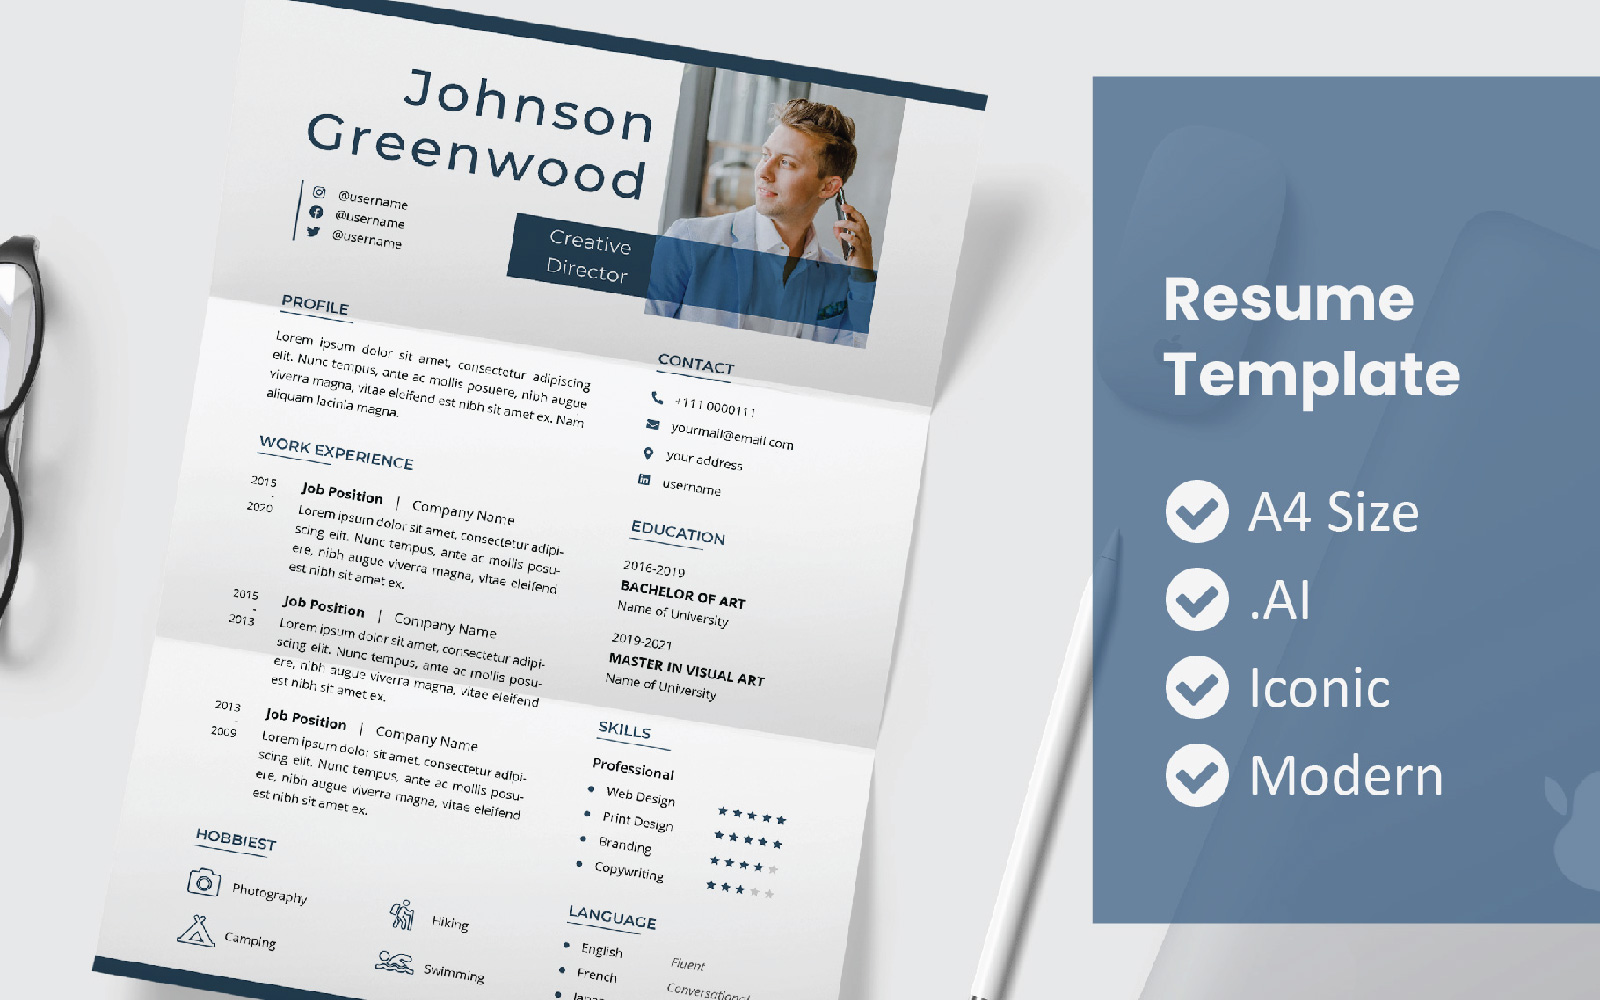 Johnson Resume Design Template